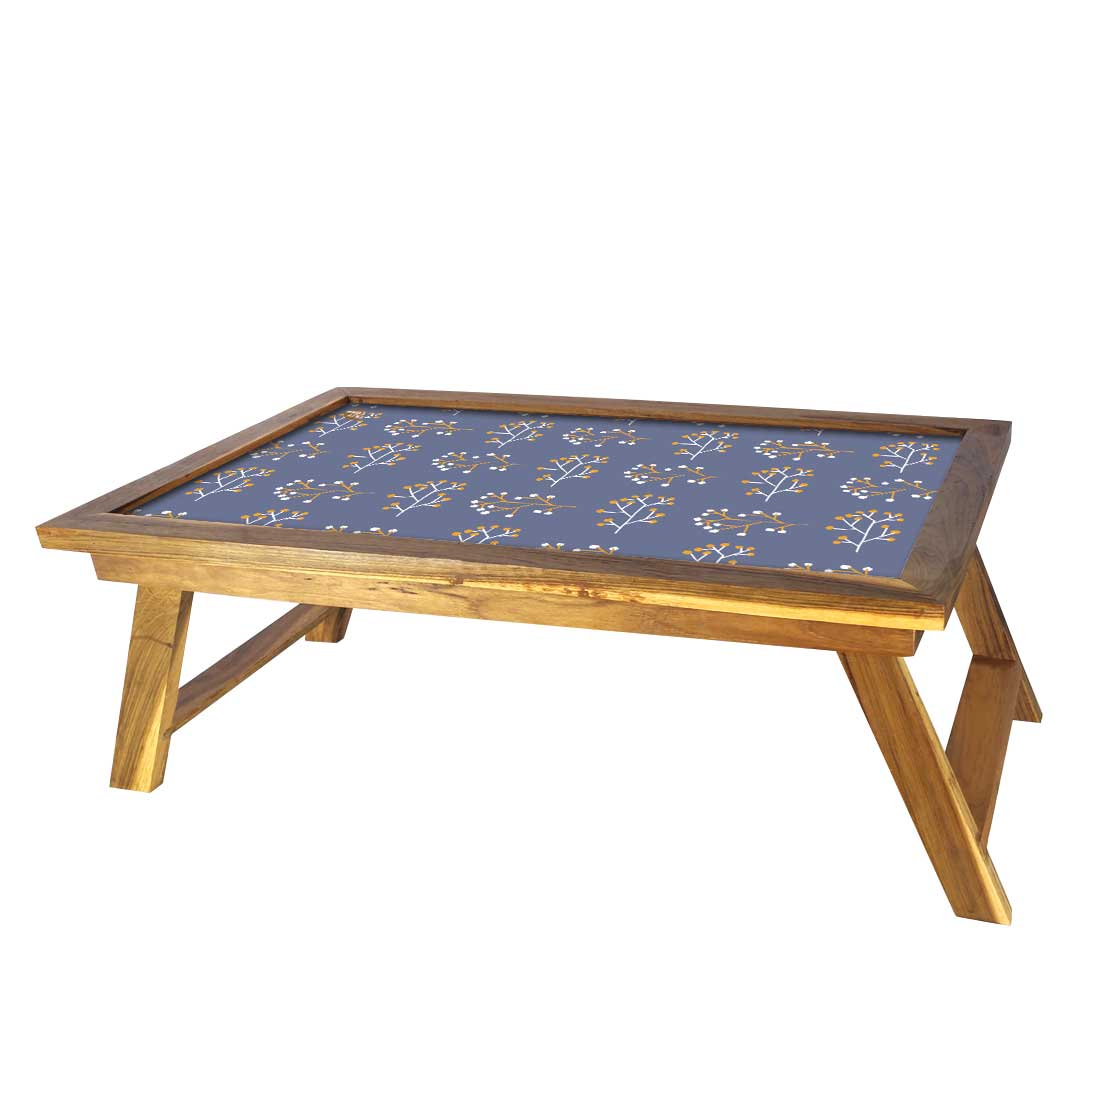 Nutcase Folding Laptop Table For Home Bed Lapdesk Breakfast Table Foldable Teak Wooden Study Desk - Dark Pastels Nutcase